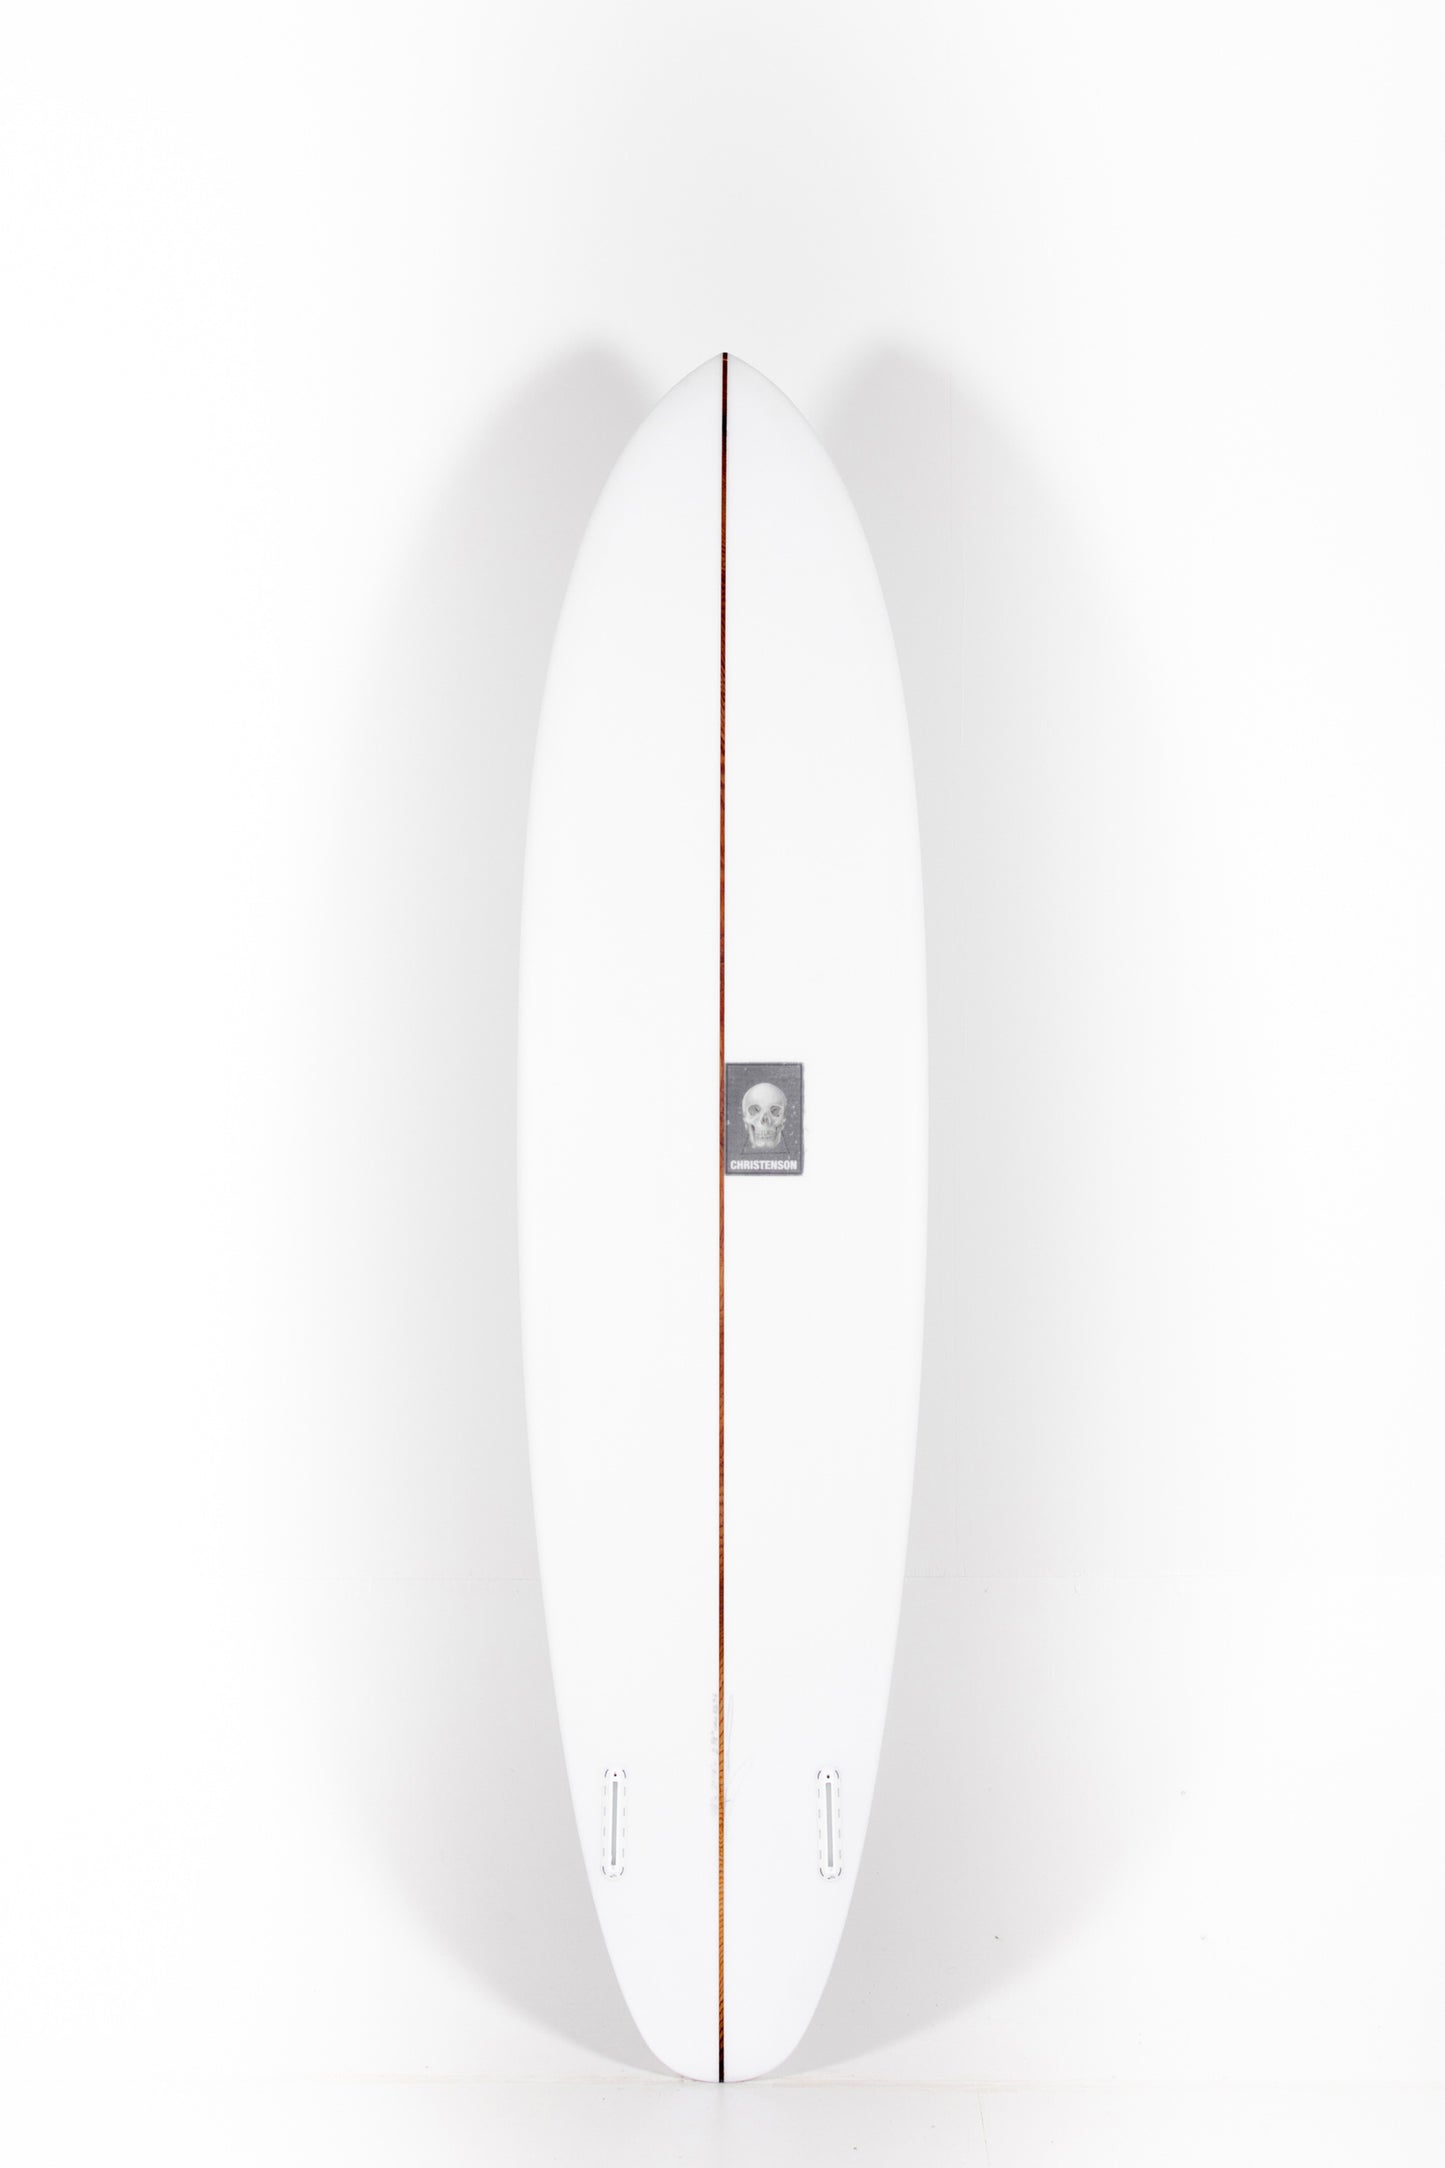 Pukas Surf Shop - Christenson Surfboards - TWIN TRACKER - 7'6" x 21 1/4  x 2 7/8 - CX03298